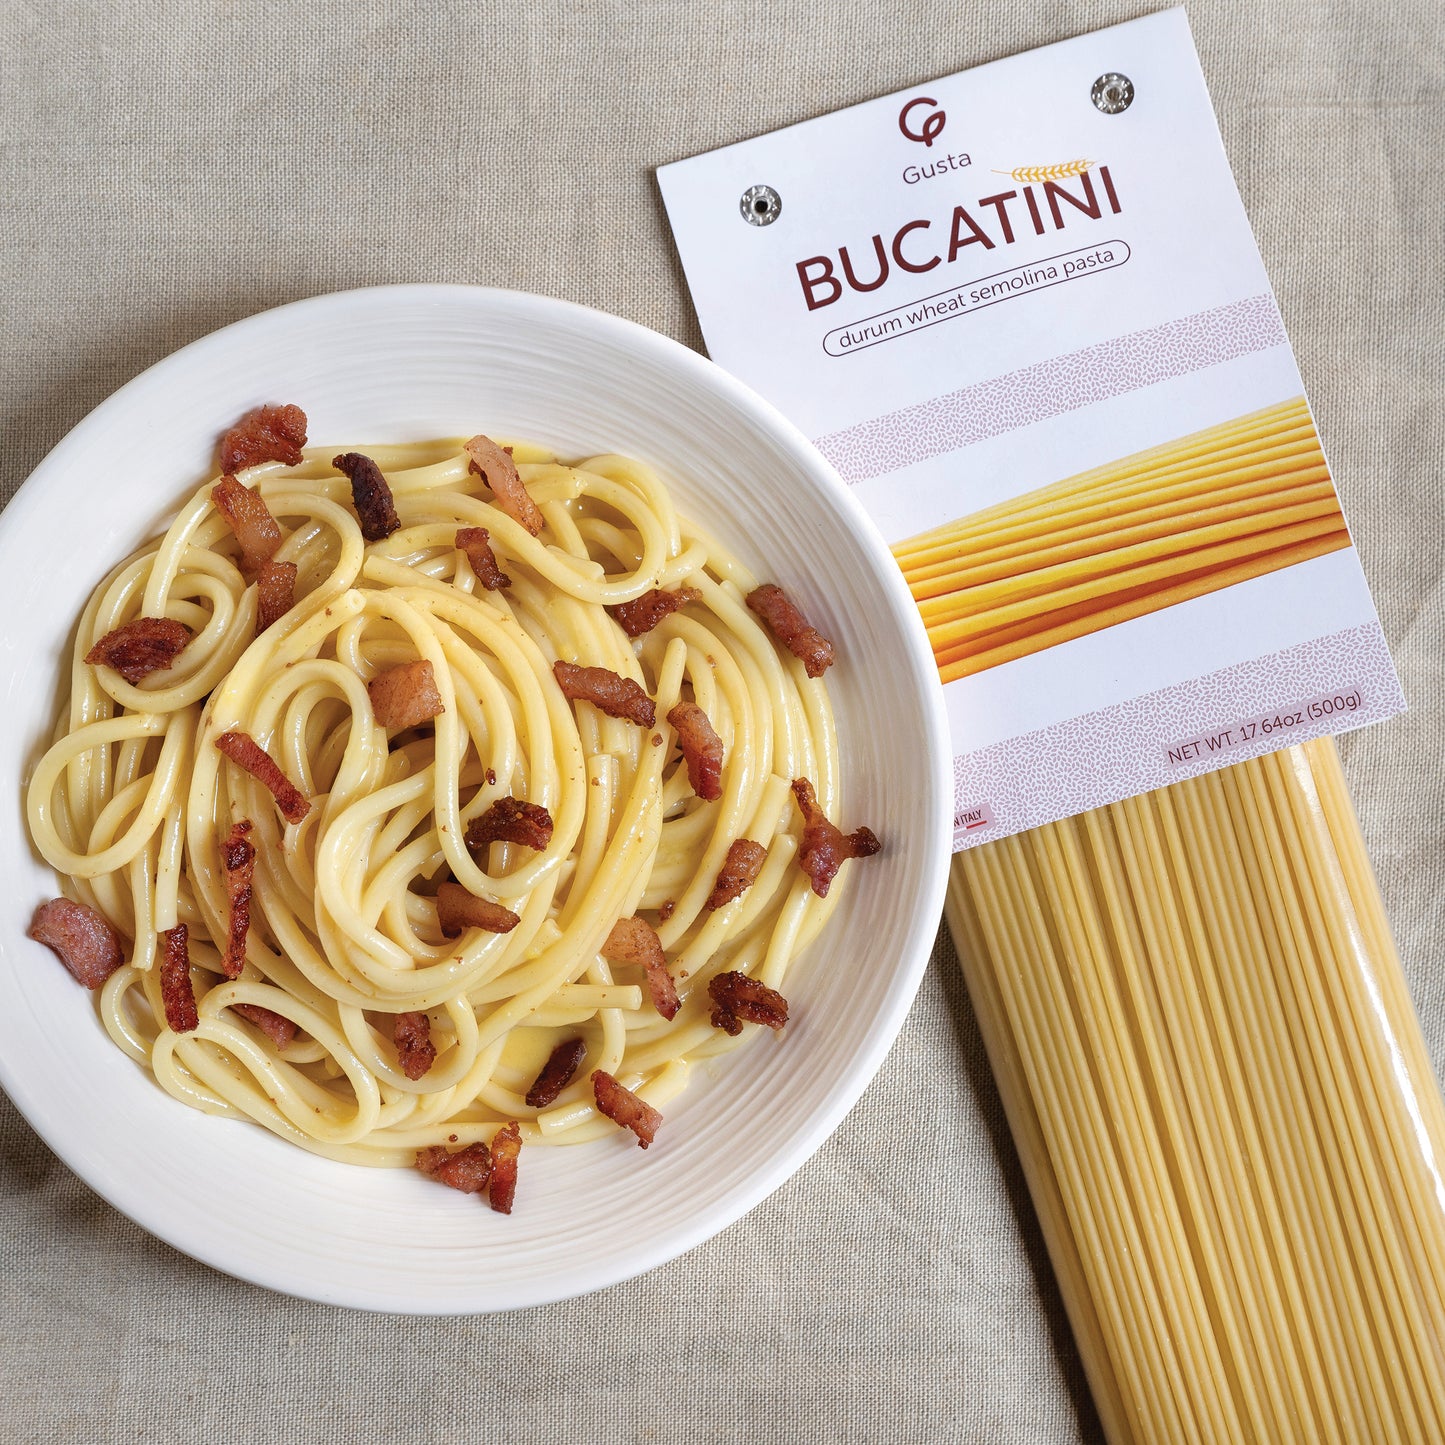 Gusta Bucatini Pasta - USDA Organic - Non-GMO Durum Wheat Semolina